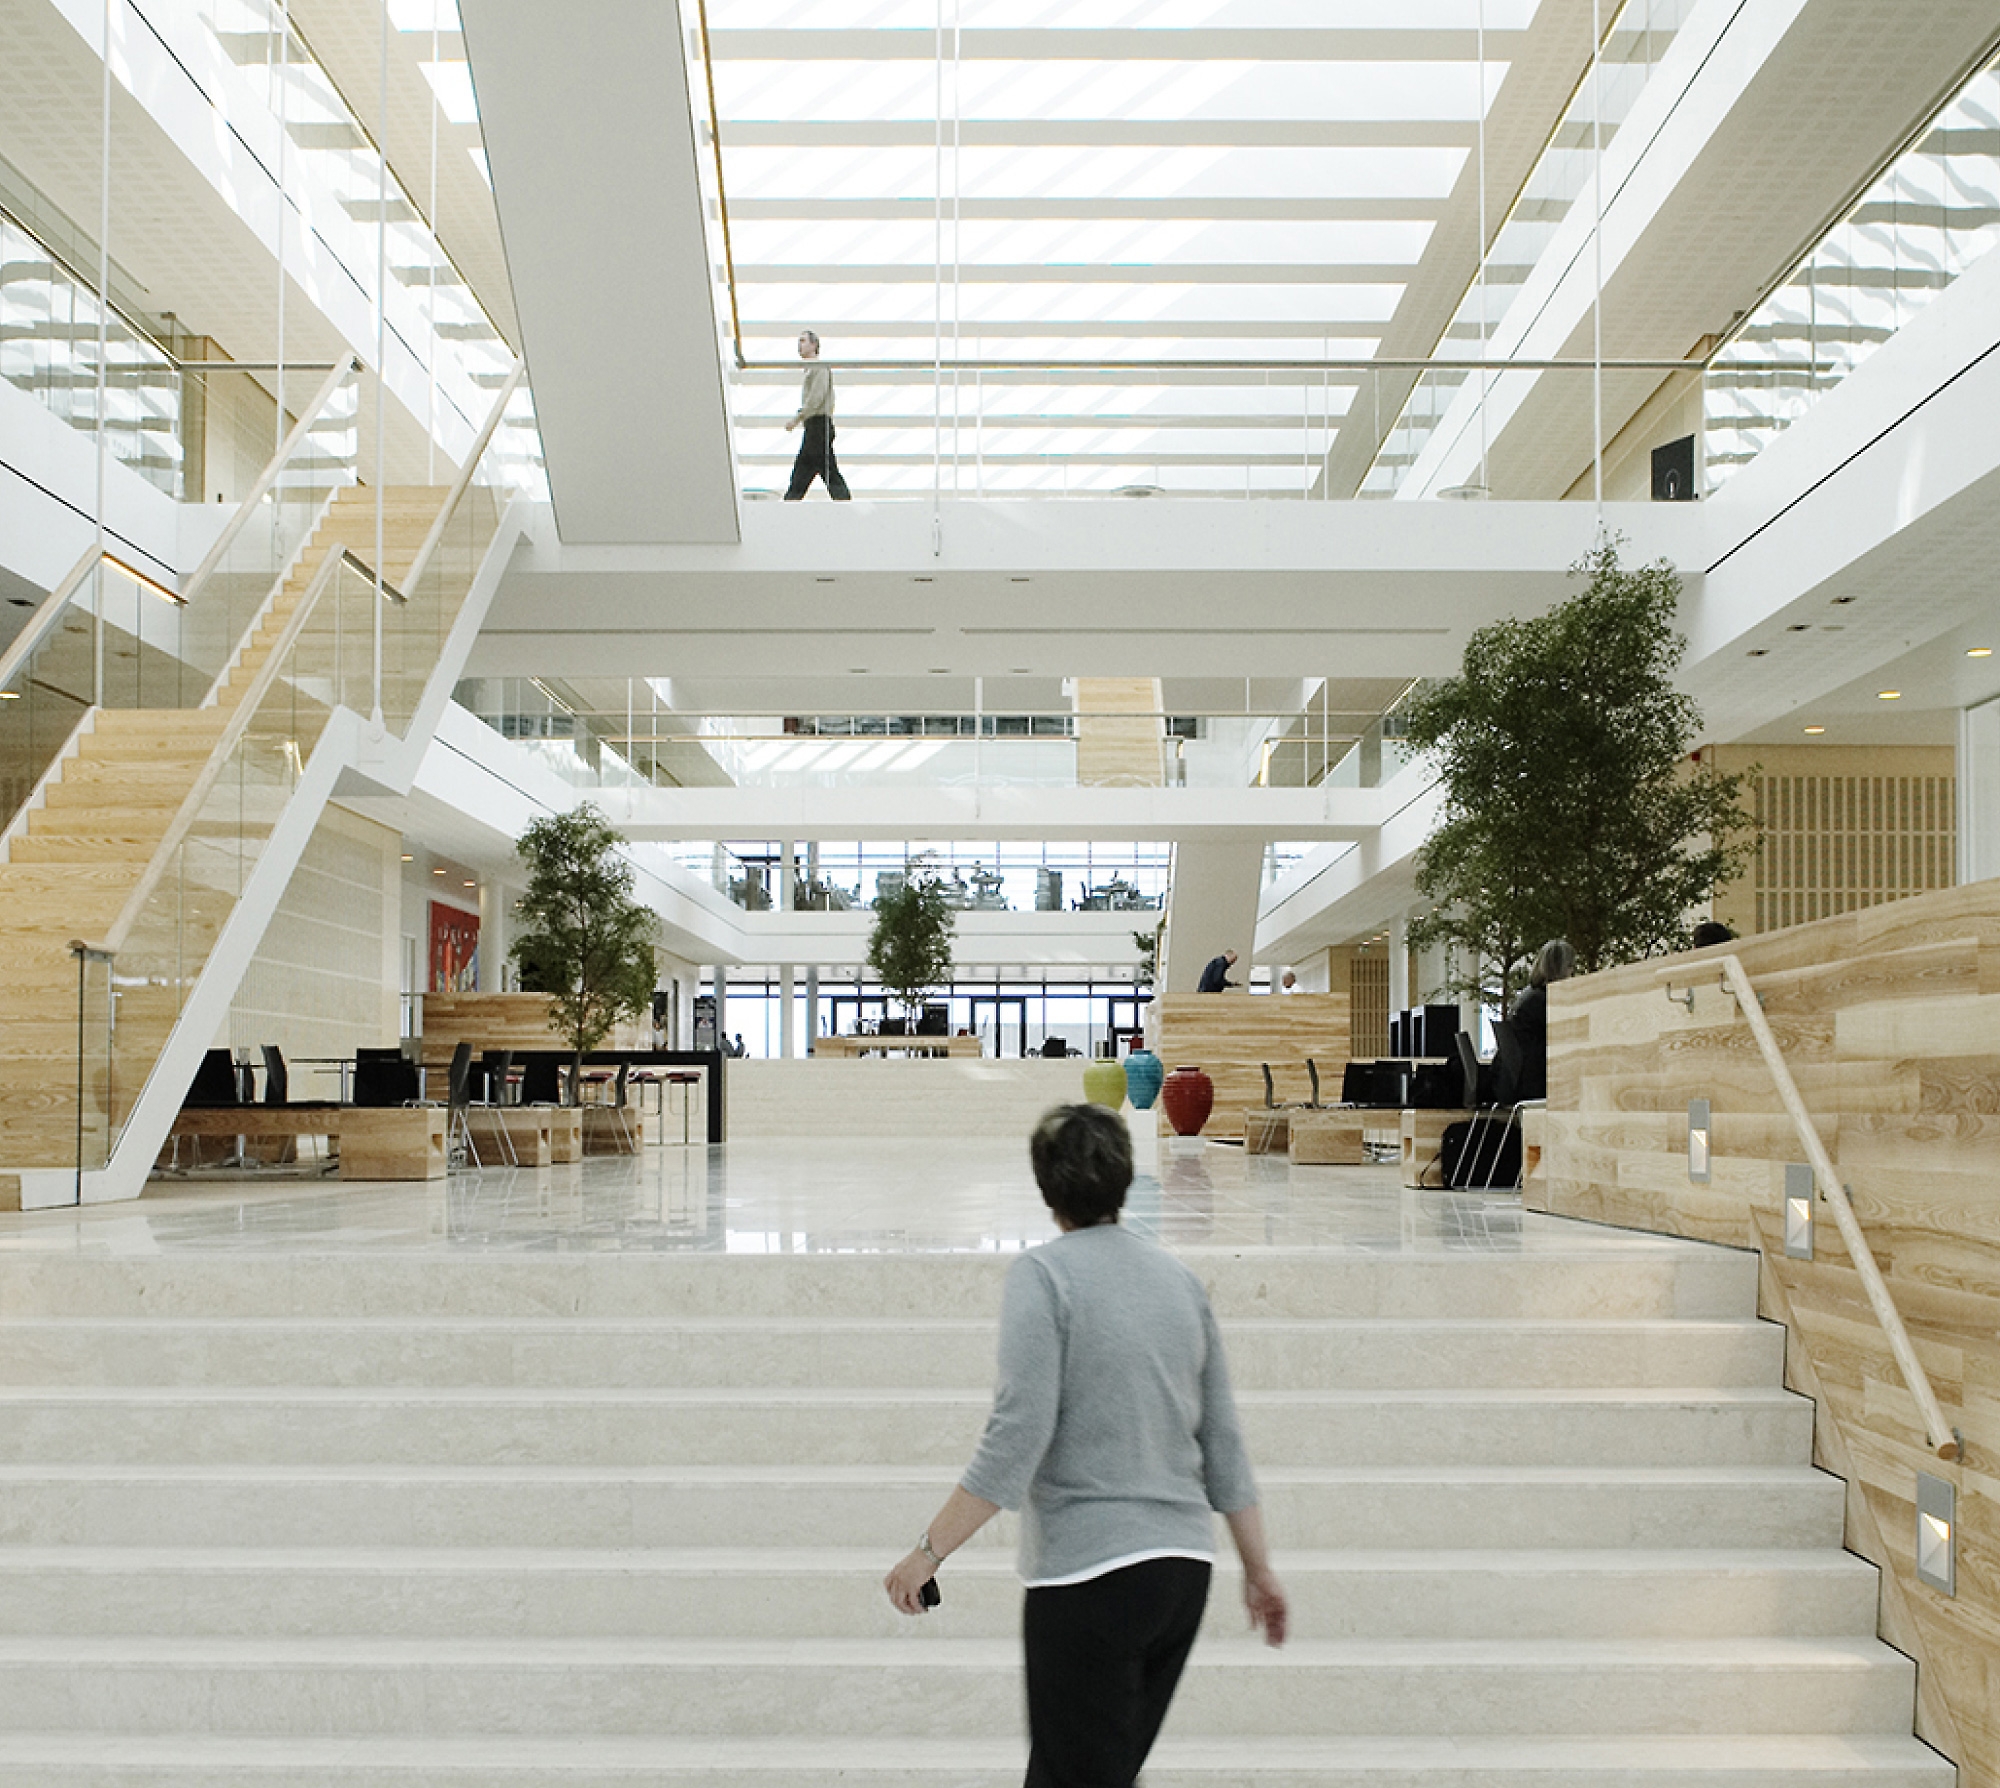 Moderne kontorlobby med store hvite trapper, treuthevinger og personer som går rundt. Lys og luftig atmosfære.